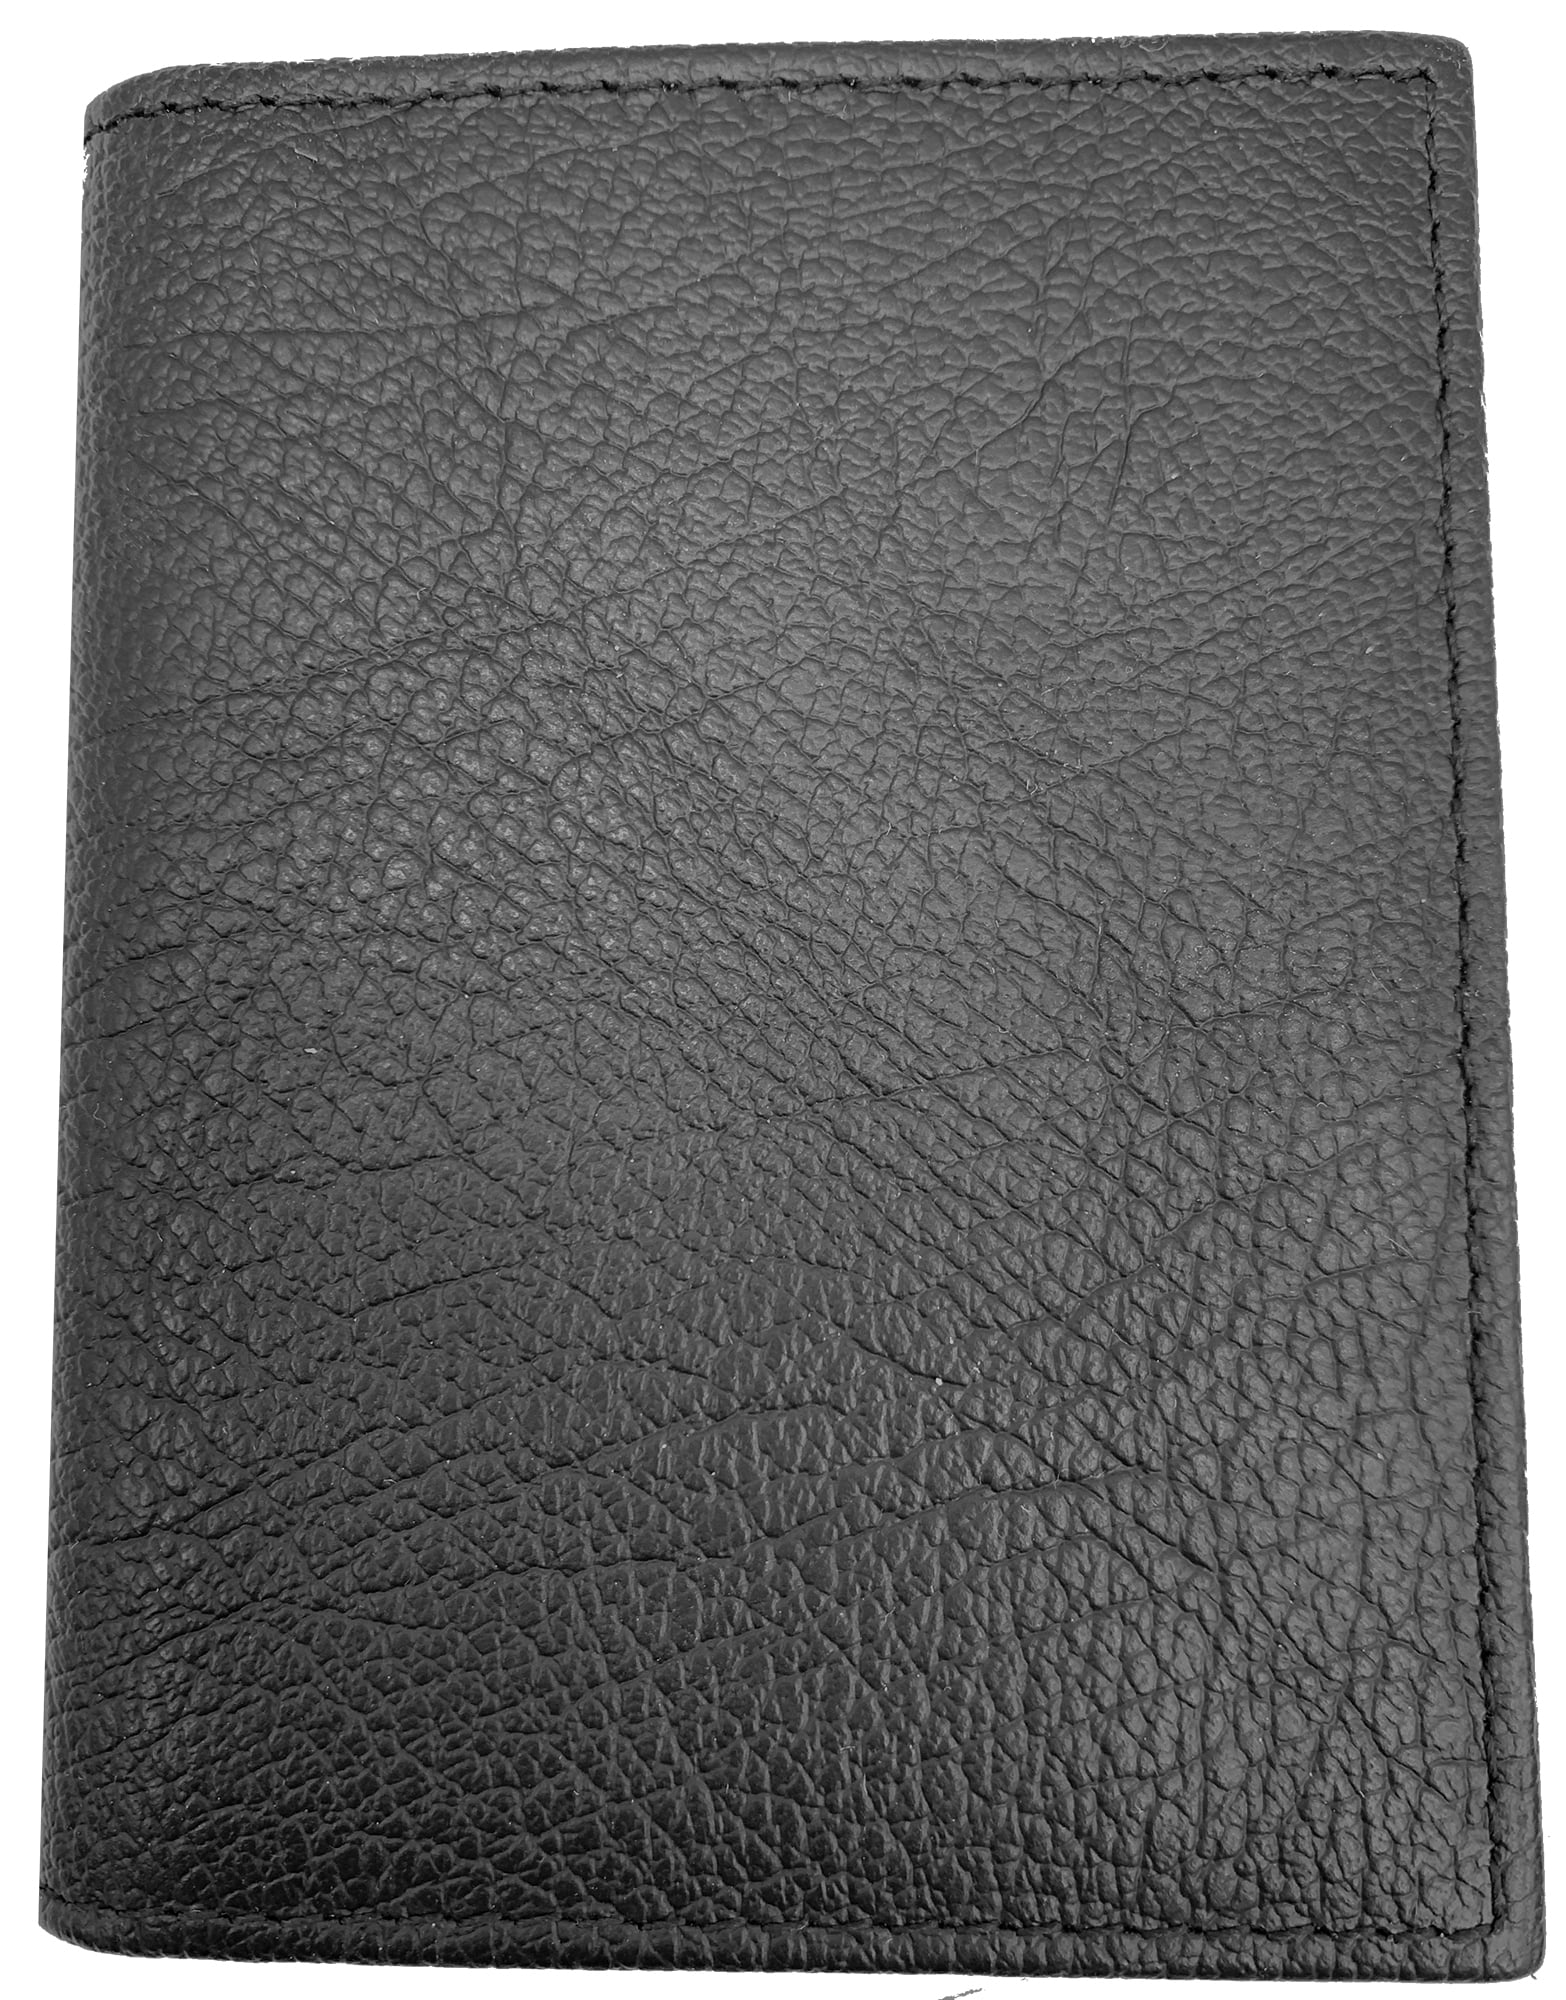 George Men's Genuine American Bison Leather Front Pocket Wallet Ranger Black, Men ages 16-99, Natural Medium Leather Grain Texture